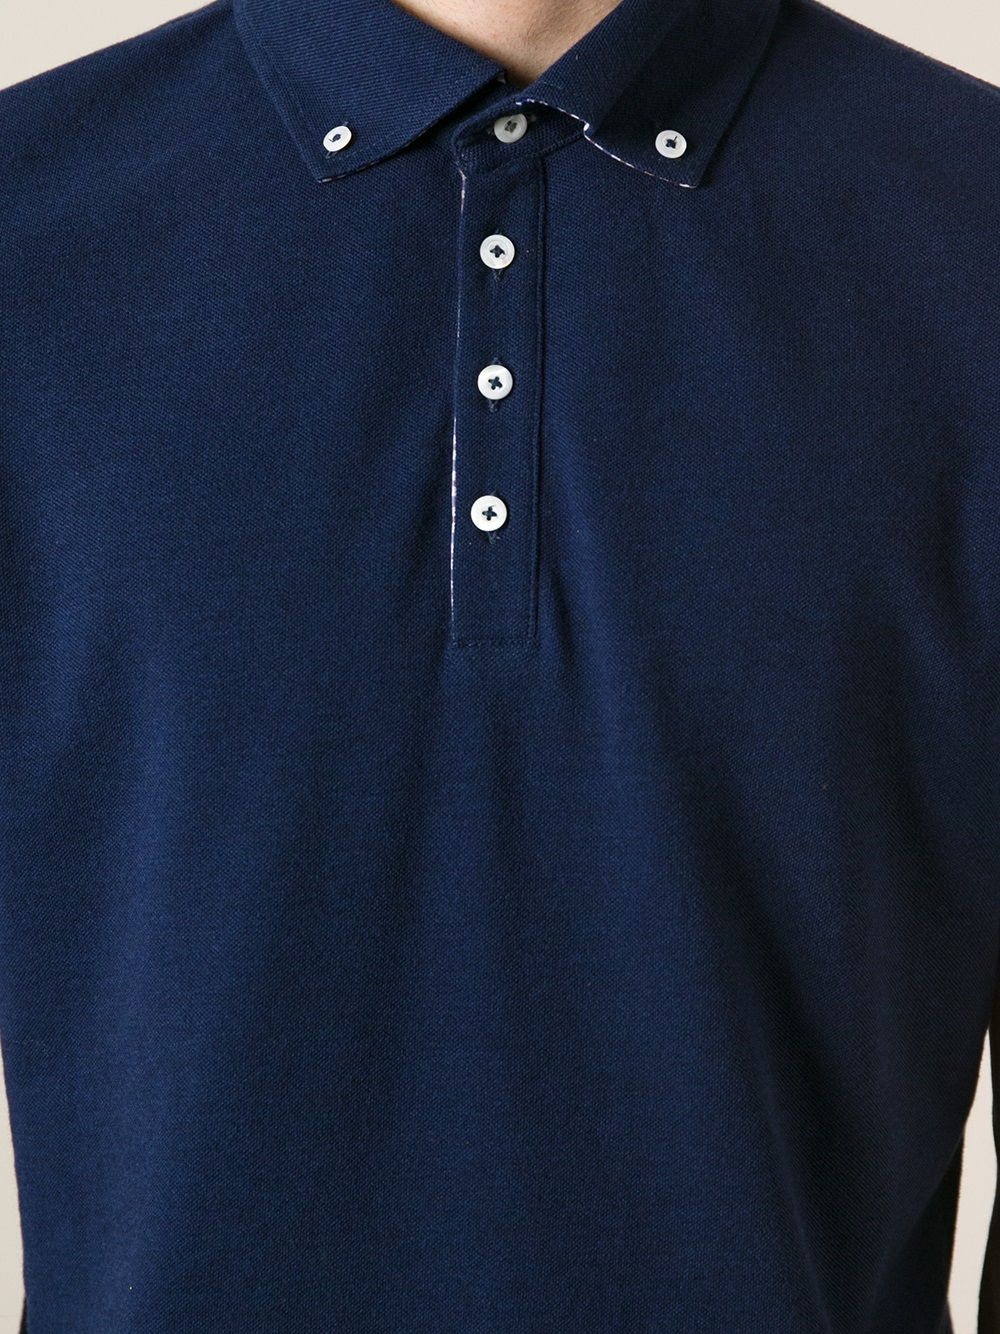 Lyst - Brunello Cucinelli Button Down Collar Polo Shirt in Blue for Men